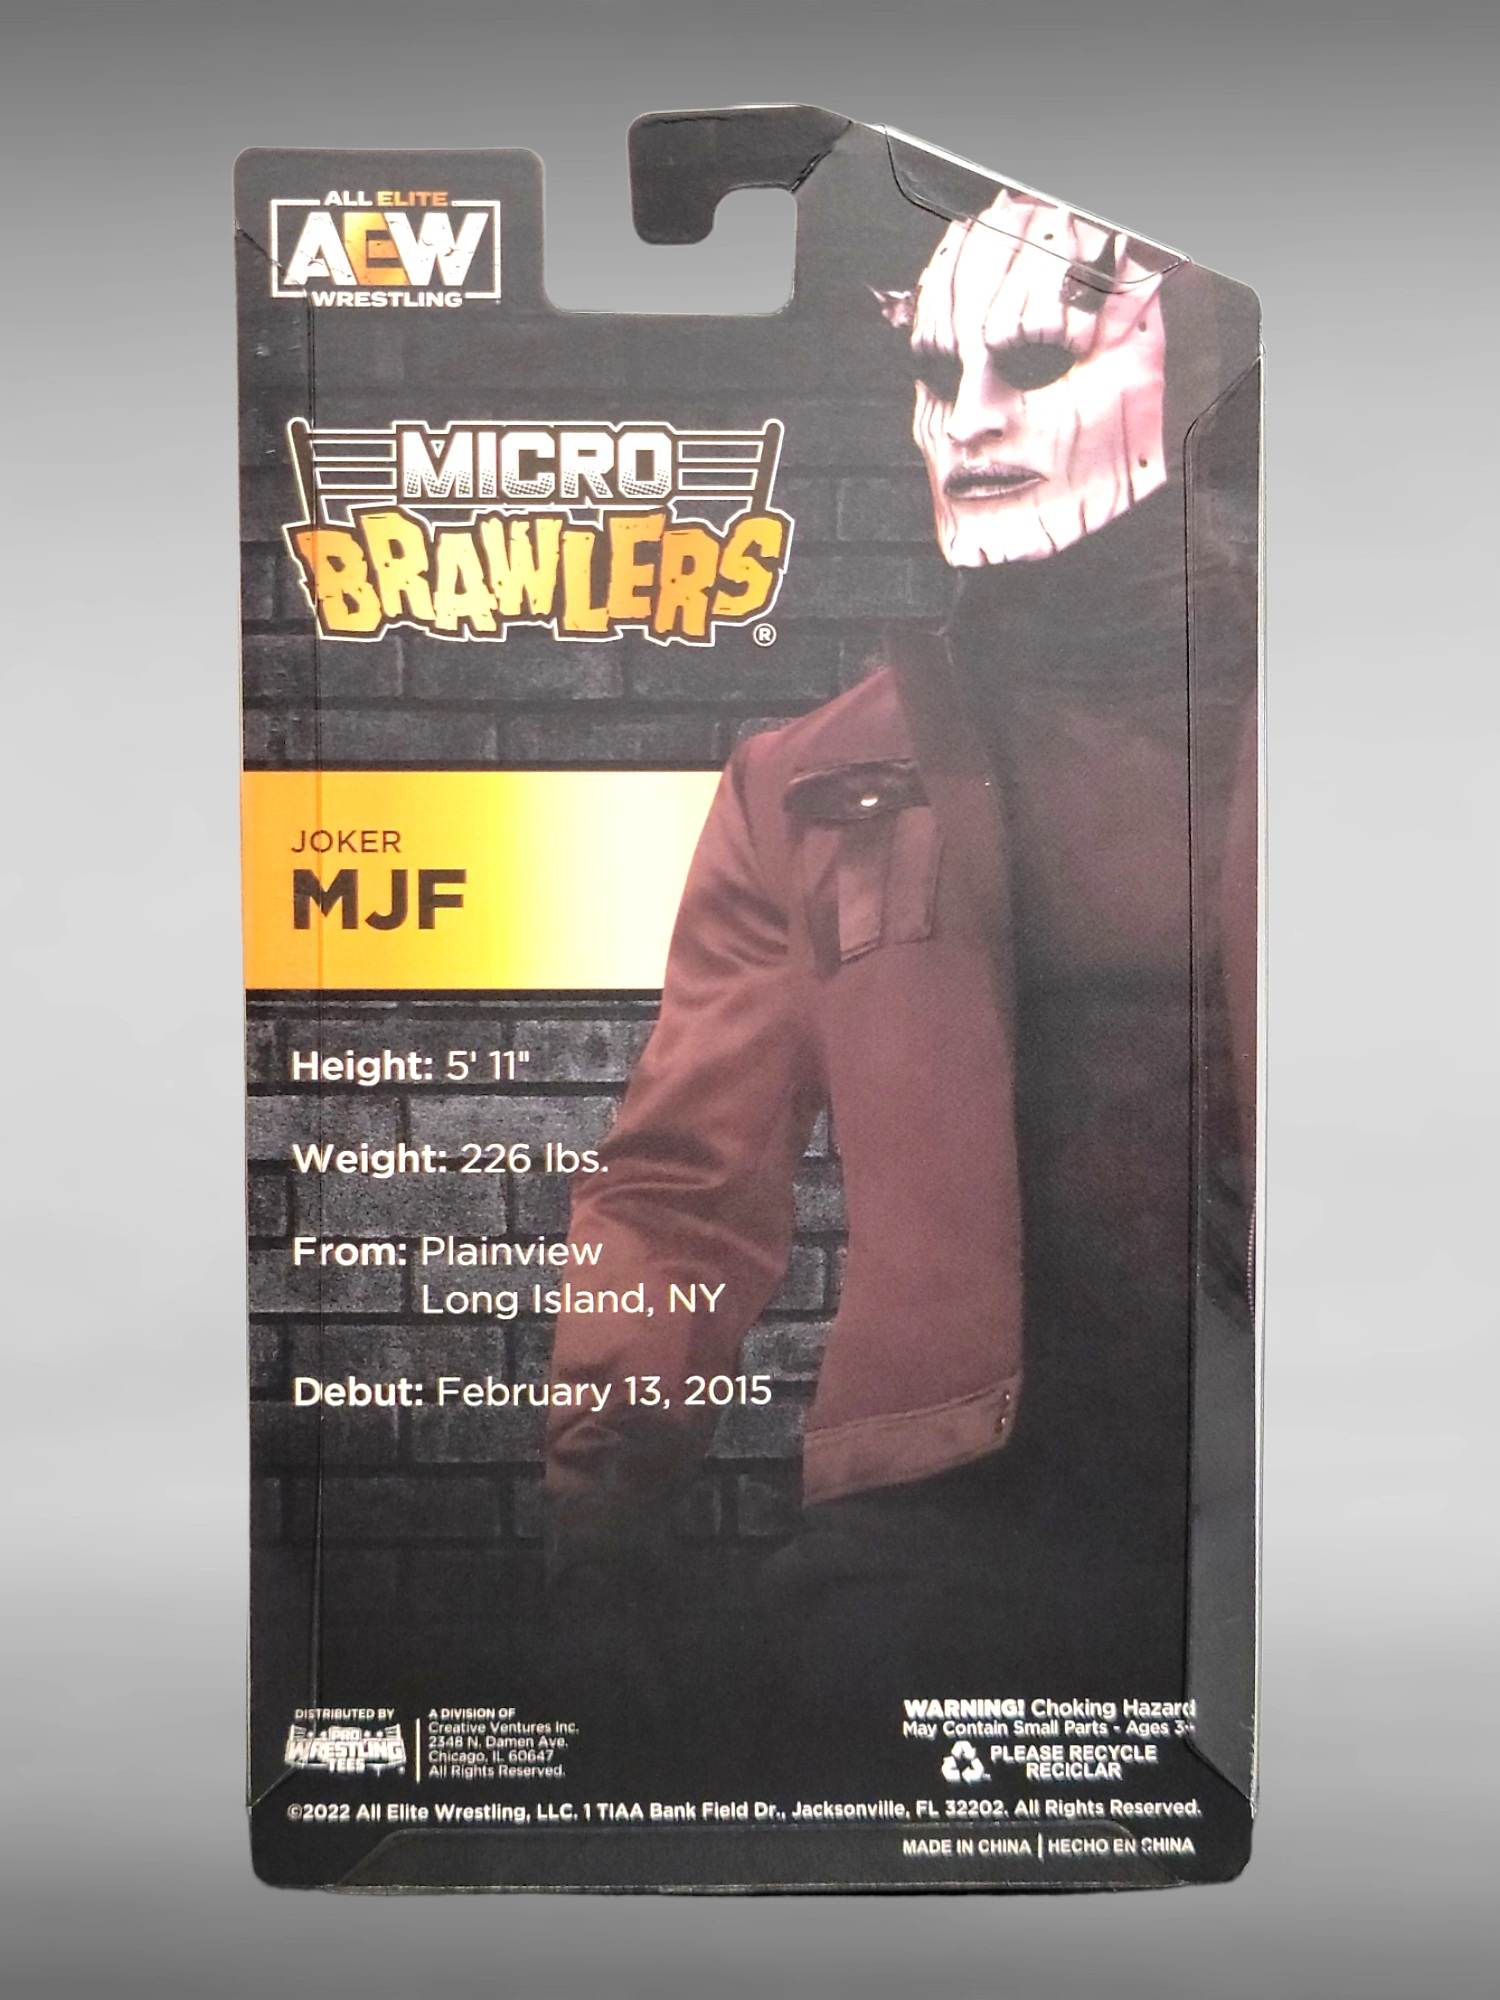 Here's an up close First Look at the AEW Micro Brawler- MJF (Joker) Pr